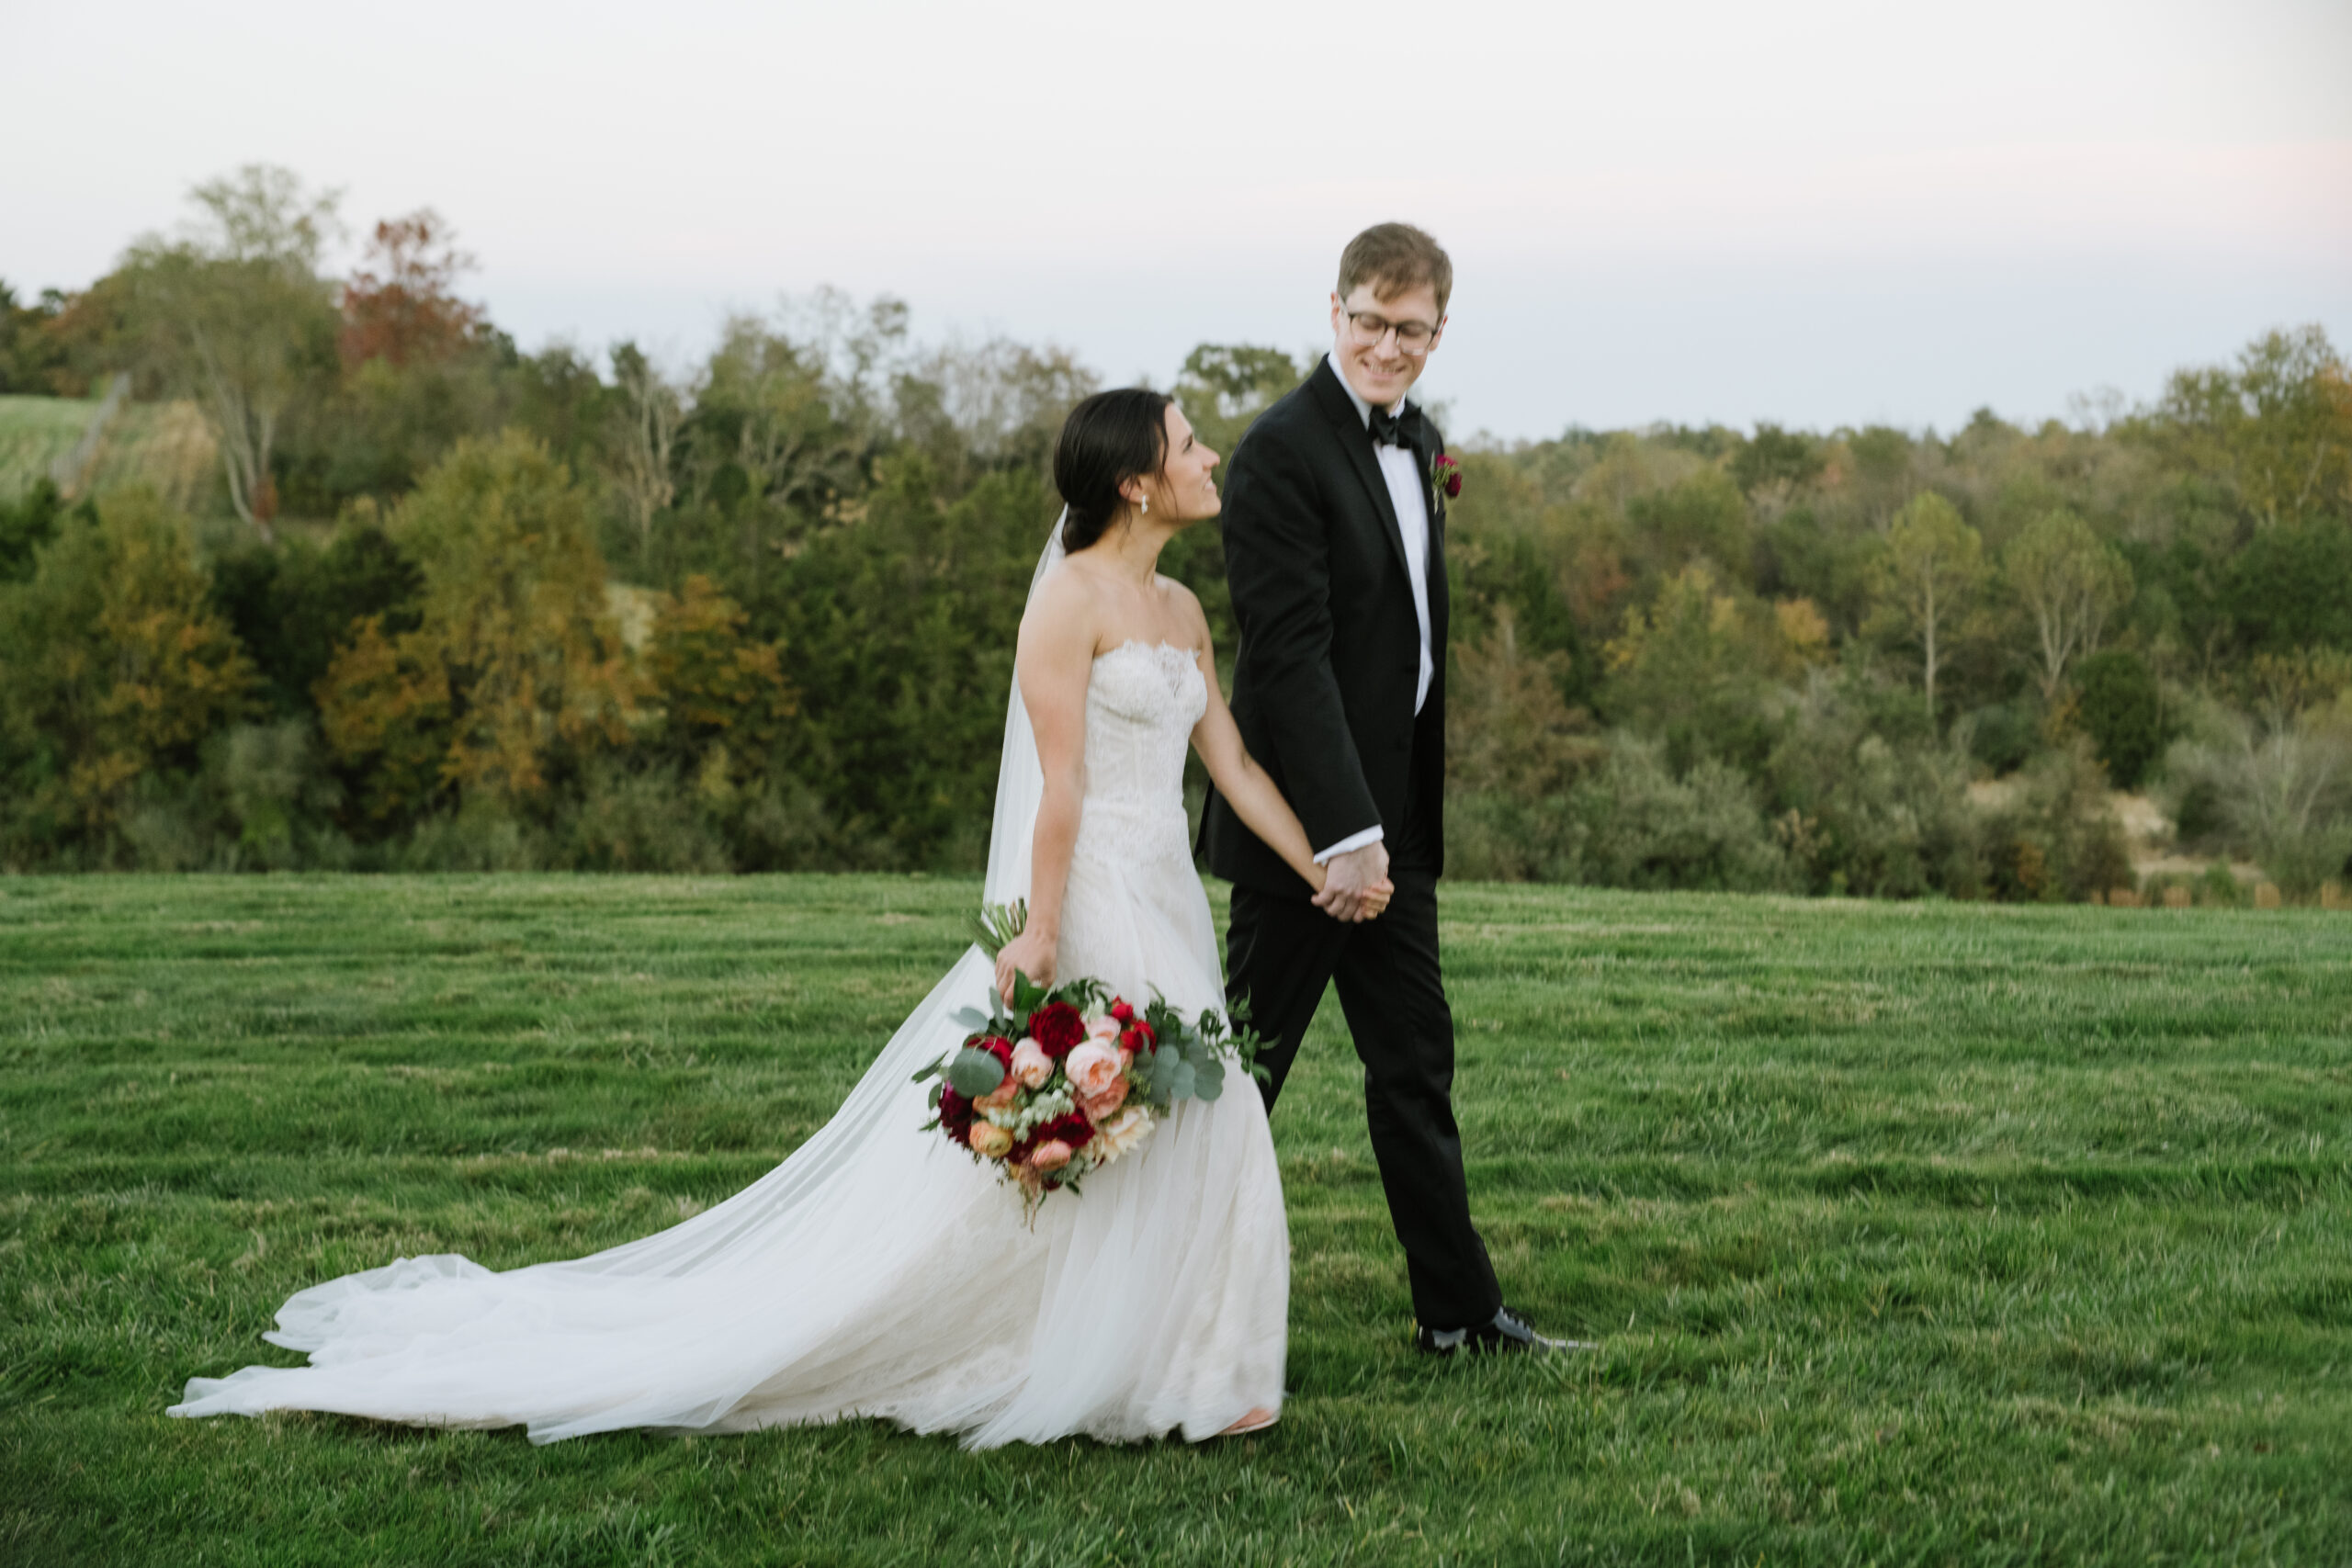 For the bride- dress hangers - Abby Grace Blog